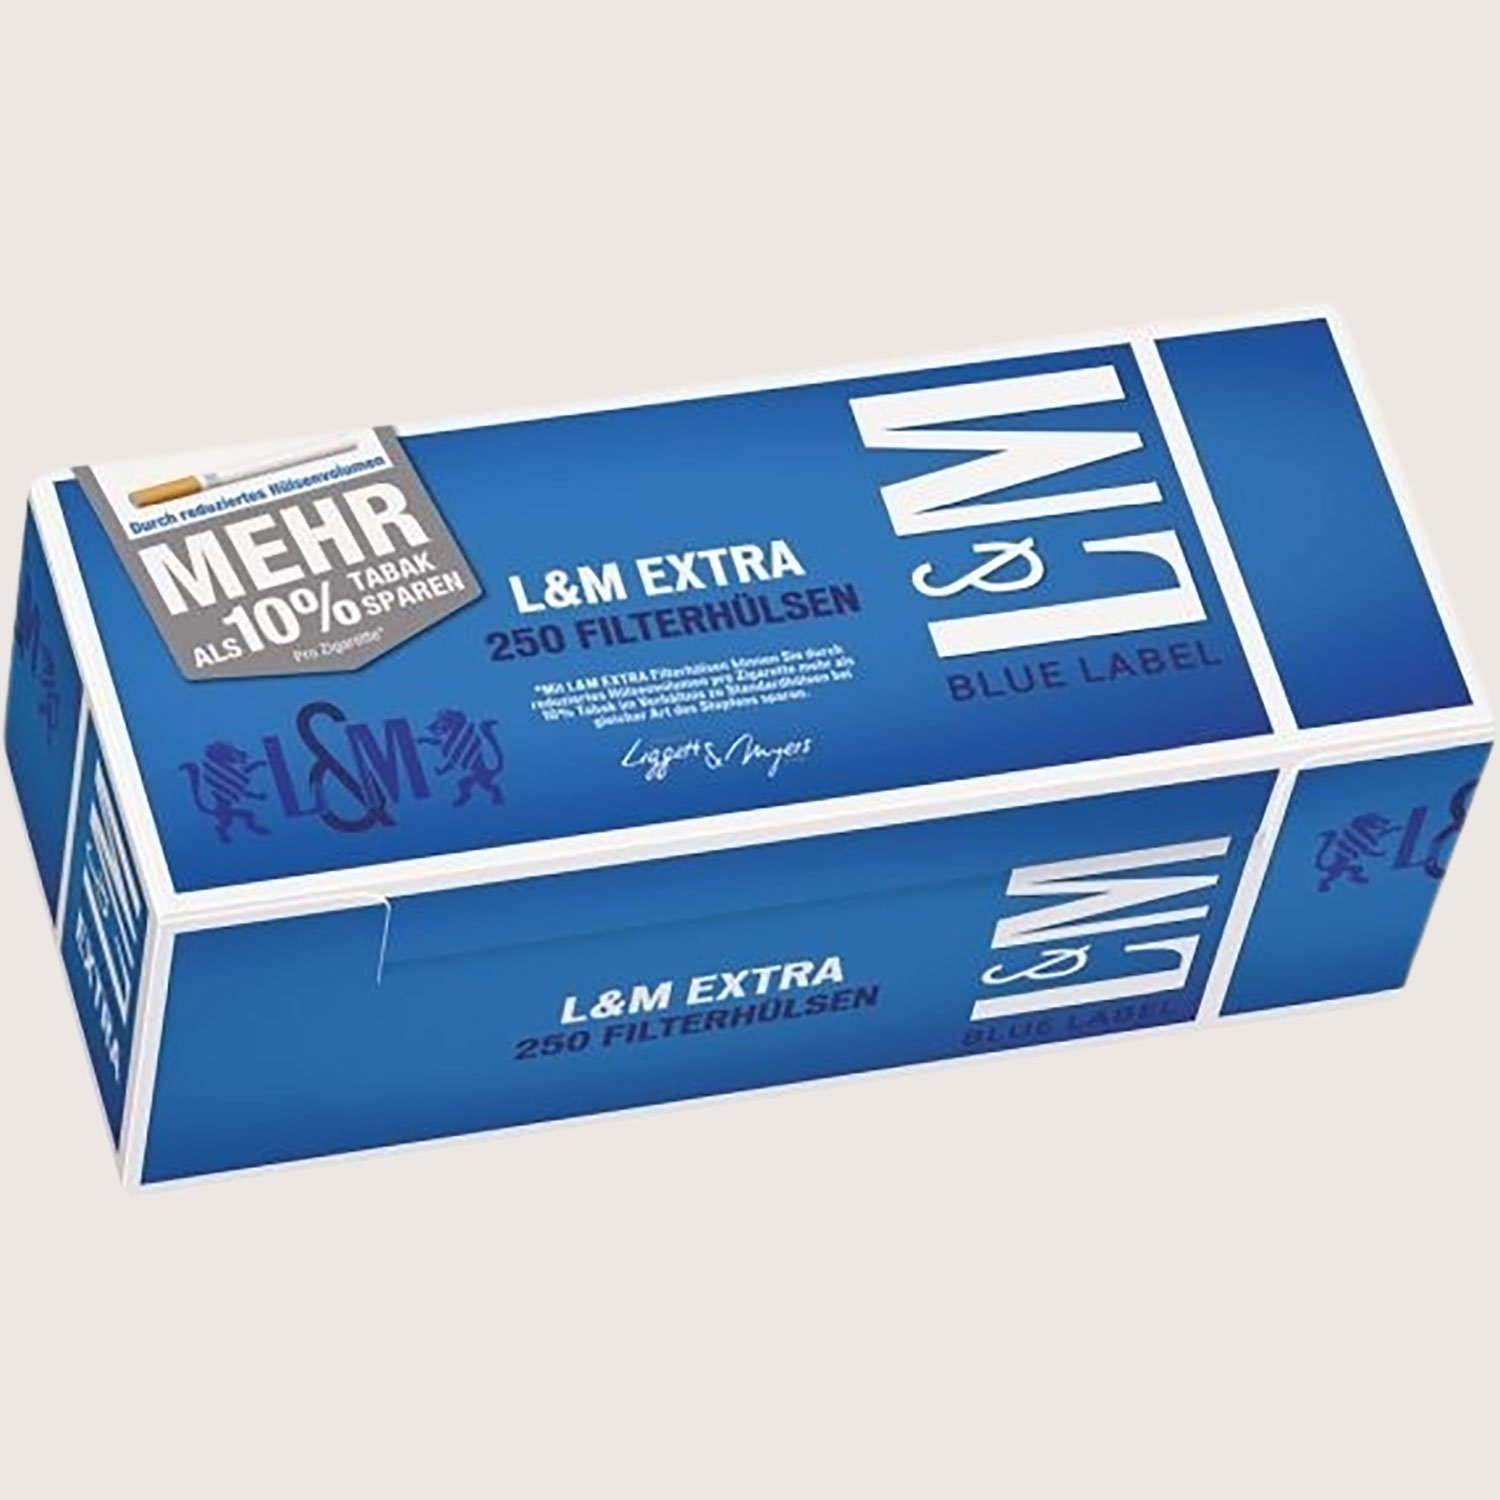 L&M Extra Blue Label 250 Hülsen